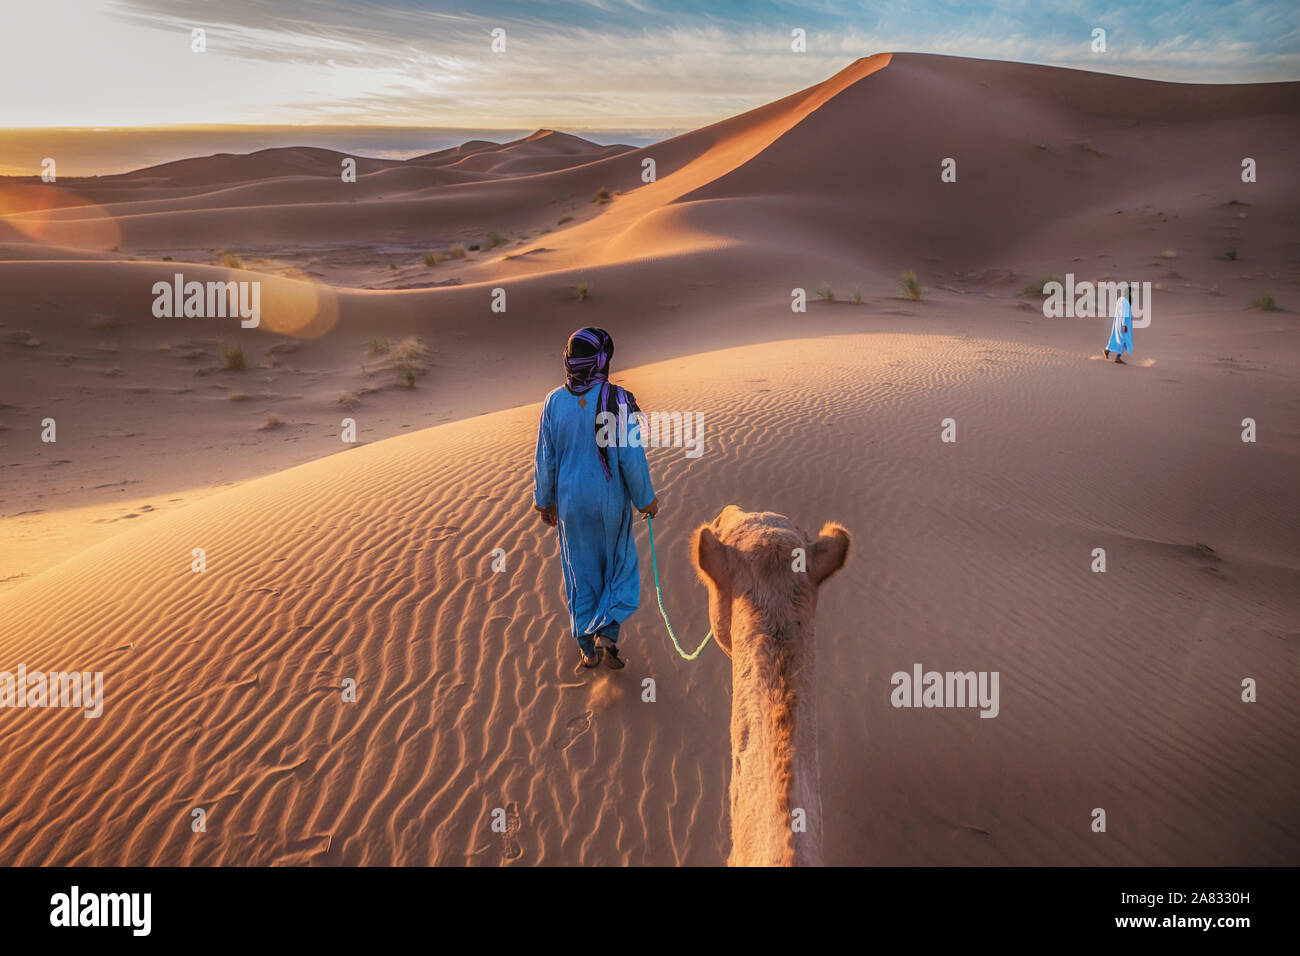 Two Tuareg nomads leading a camel in the Sahara Desert, Morocco. Stock Photo